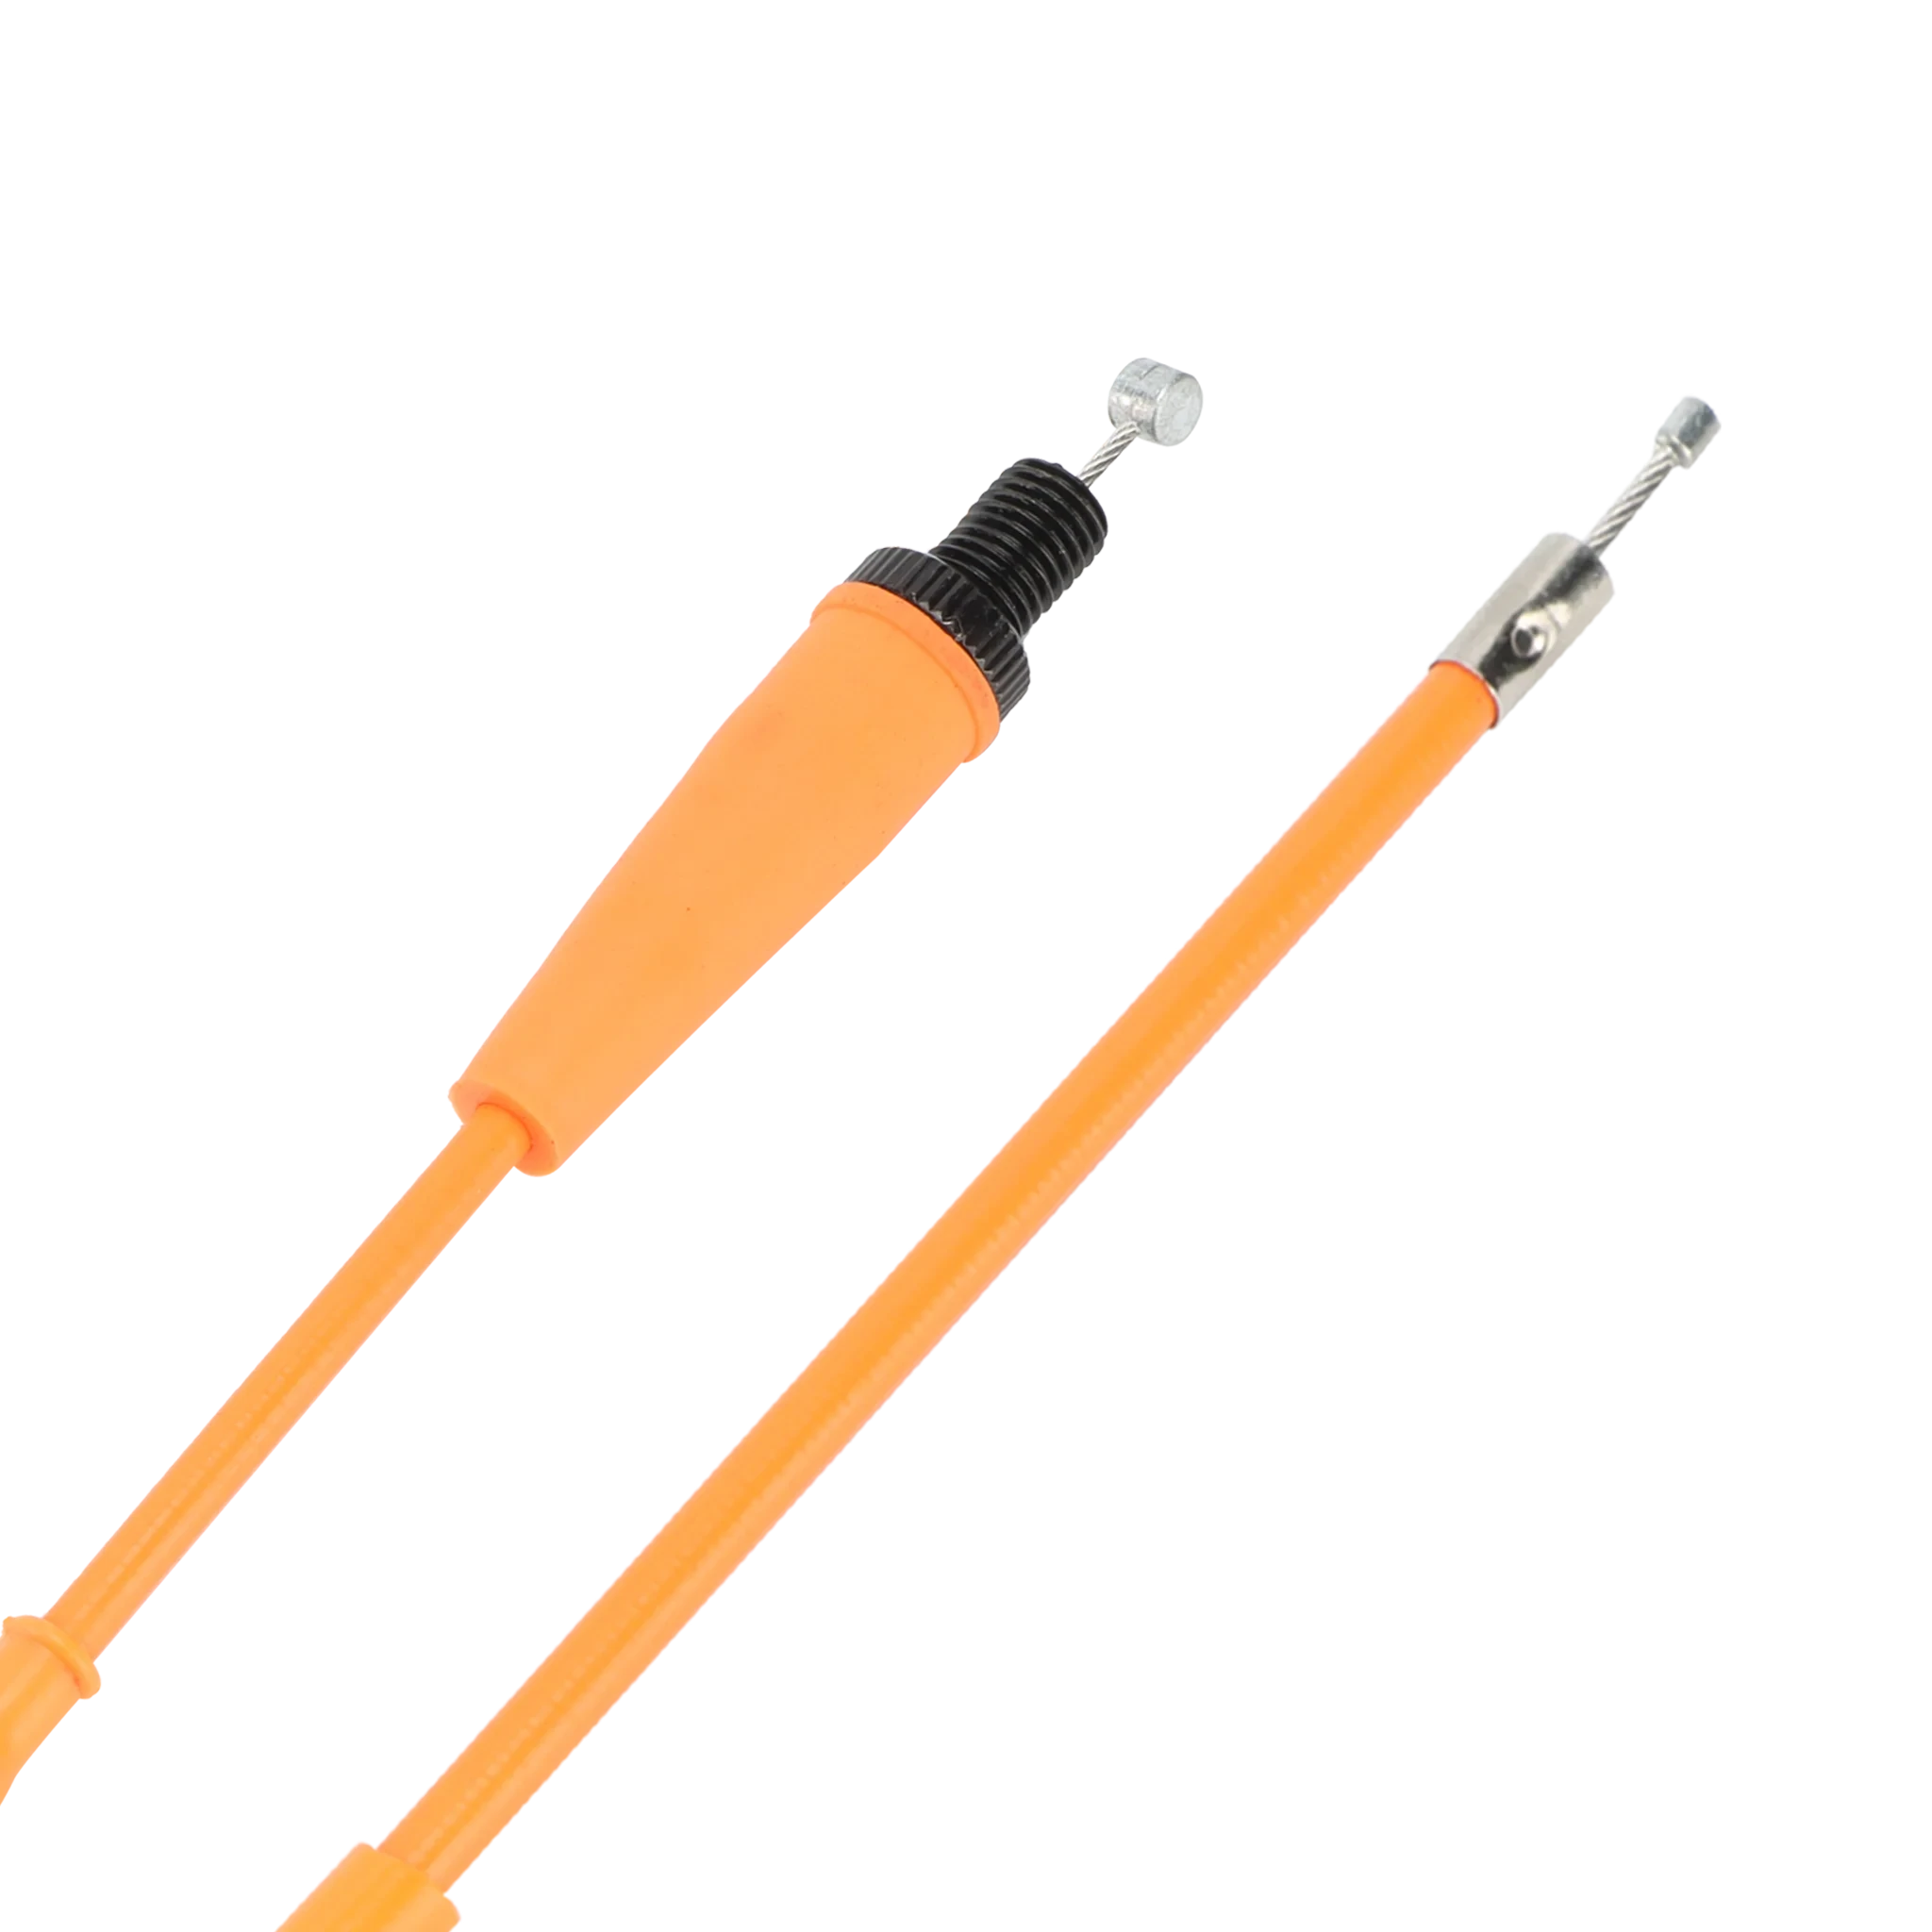 NB Throttle Cable-Orange 40.3"/5.7"